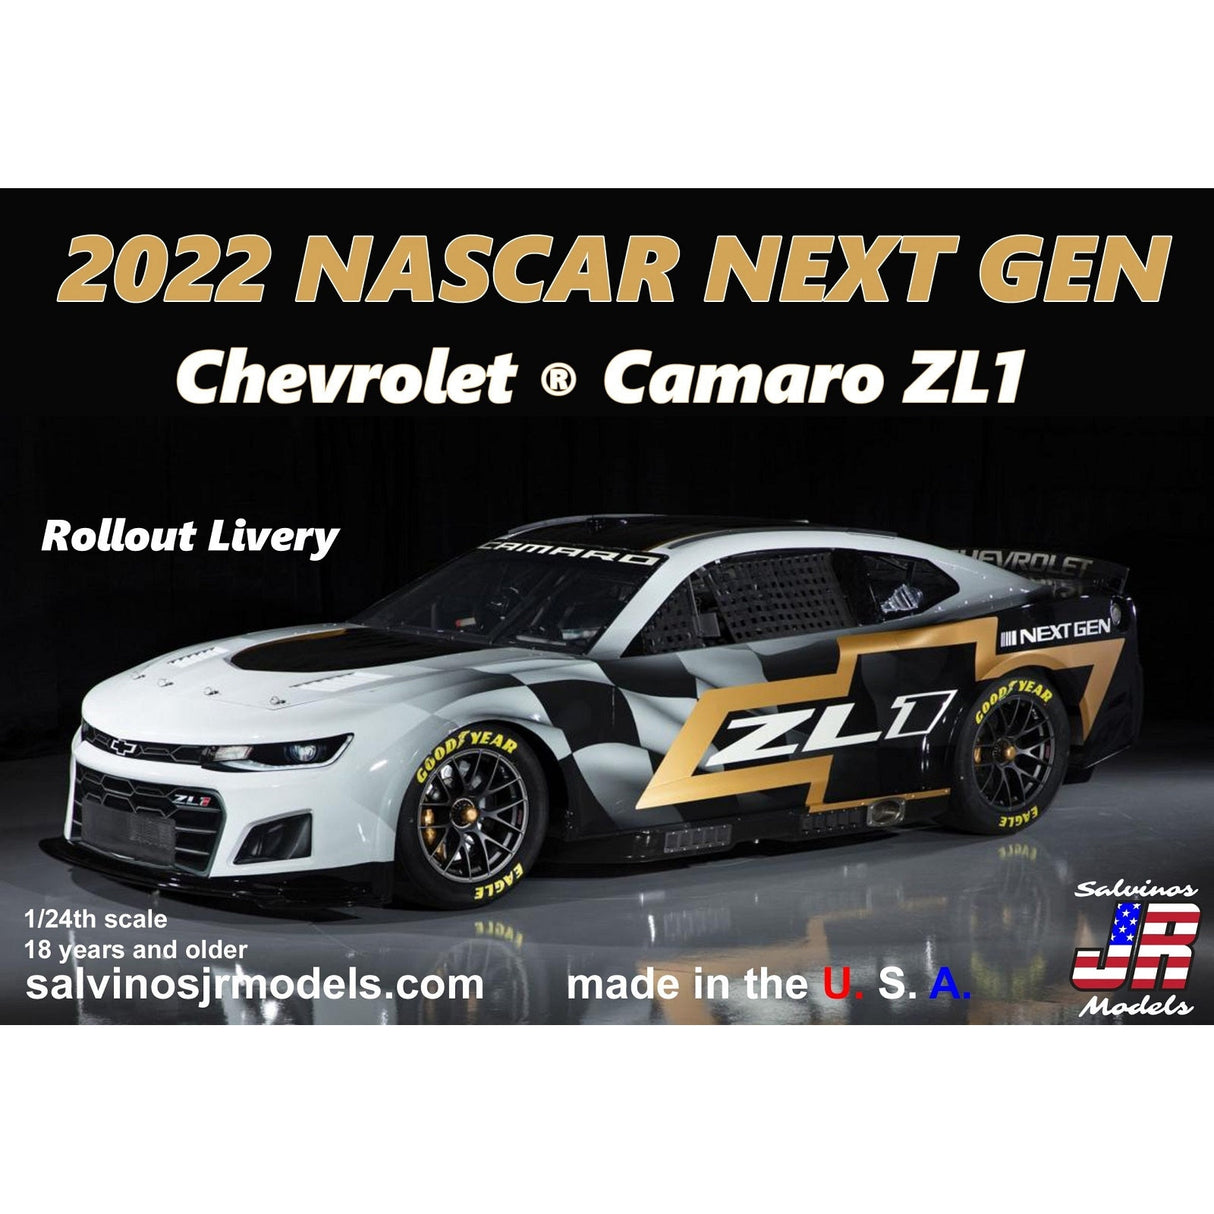 Salvinos JR Models 2022 NASCAR Chevrolet Rollout Livery Camaro Model Kit